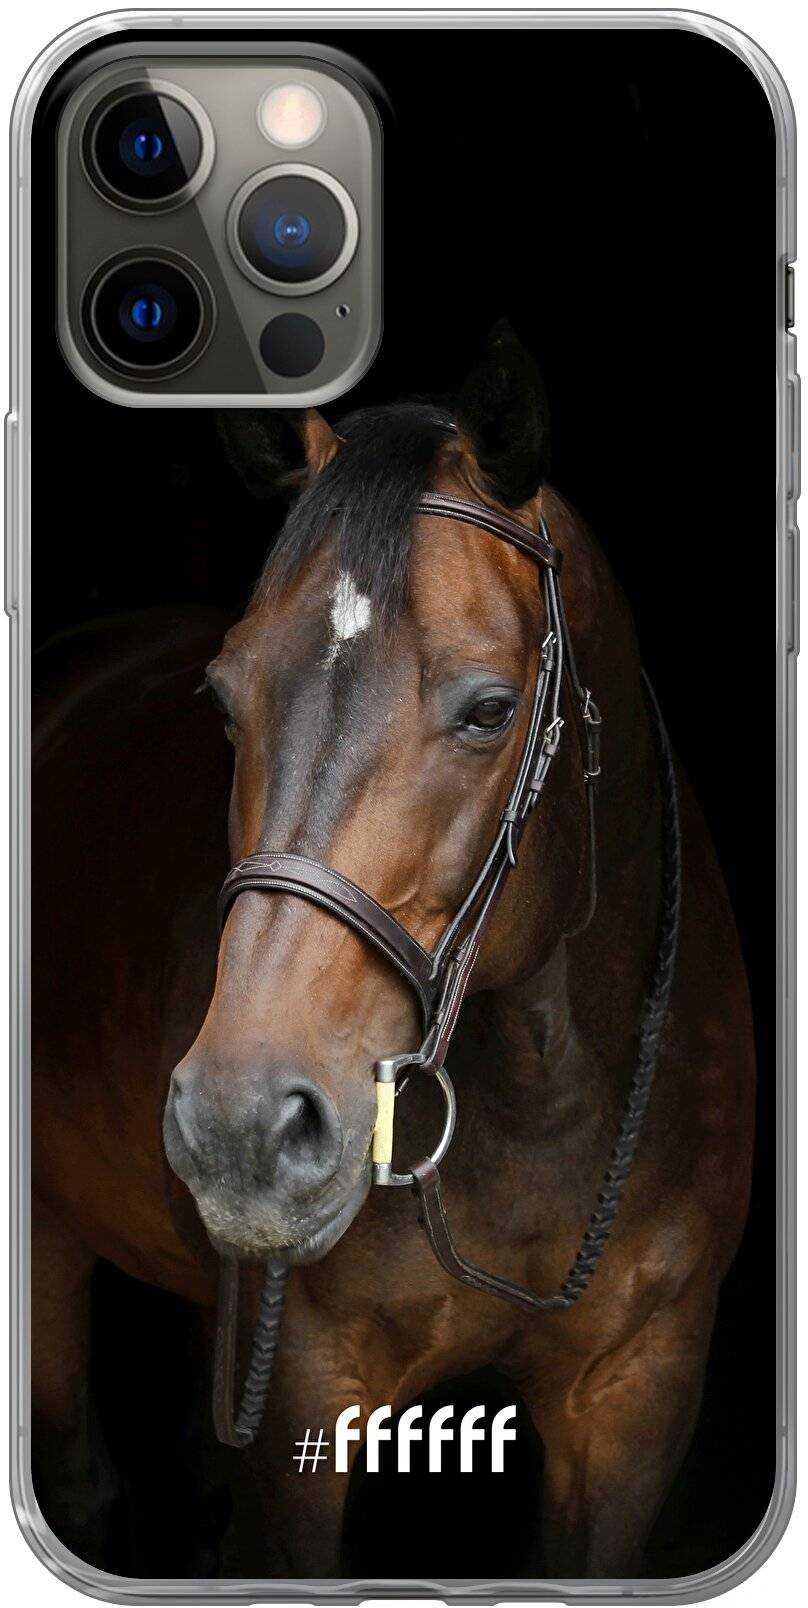 Horse iPhone 12 Pro